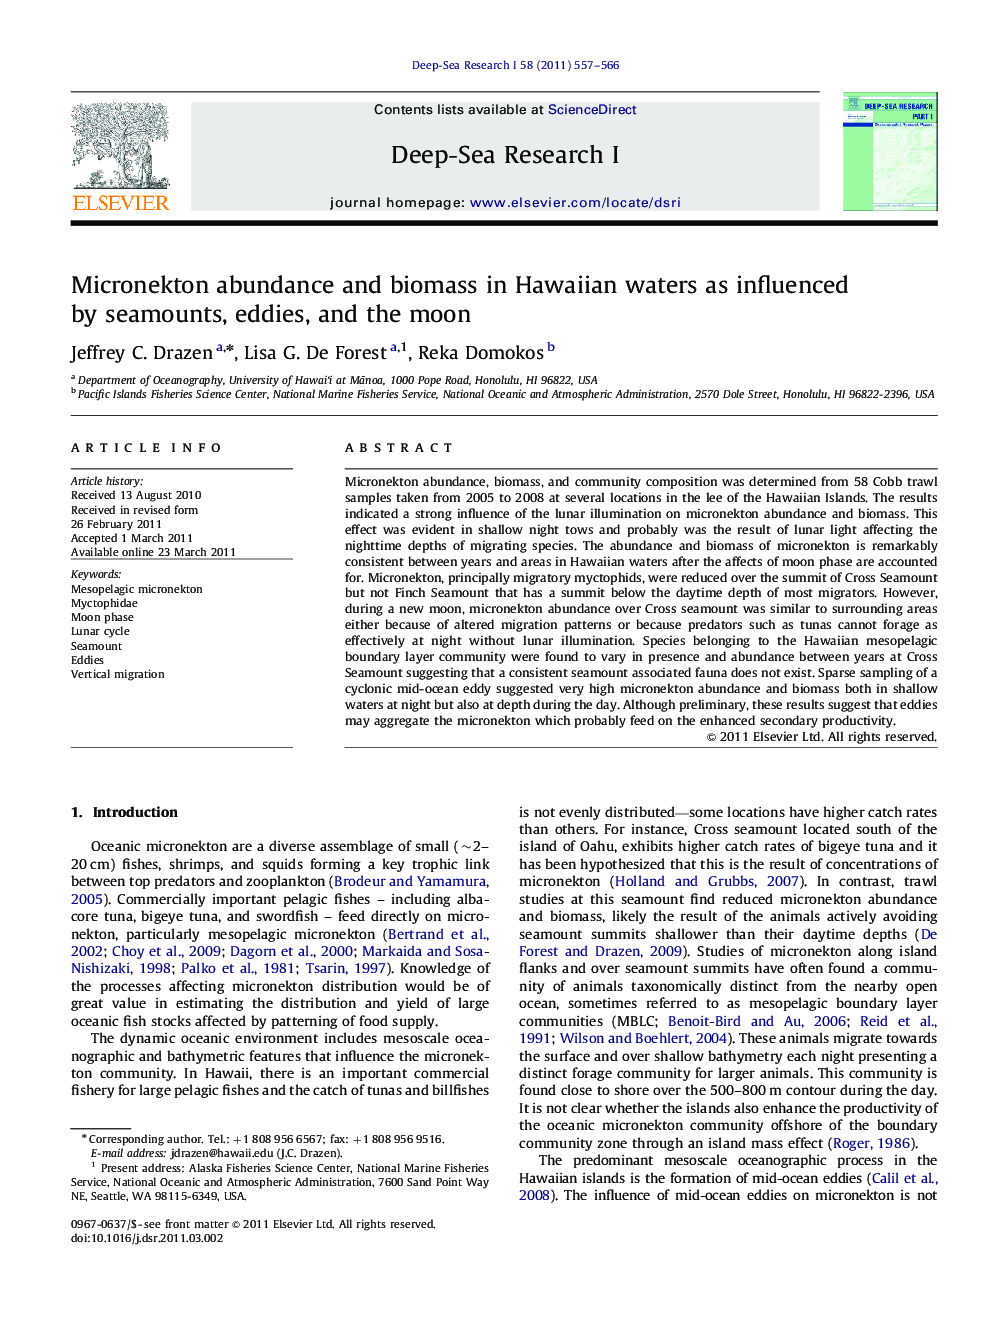 Micronekton abundance and biomass in Hawaiian waters as influenced by seamounts, eddies, and the moon